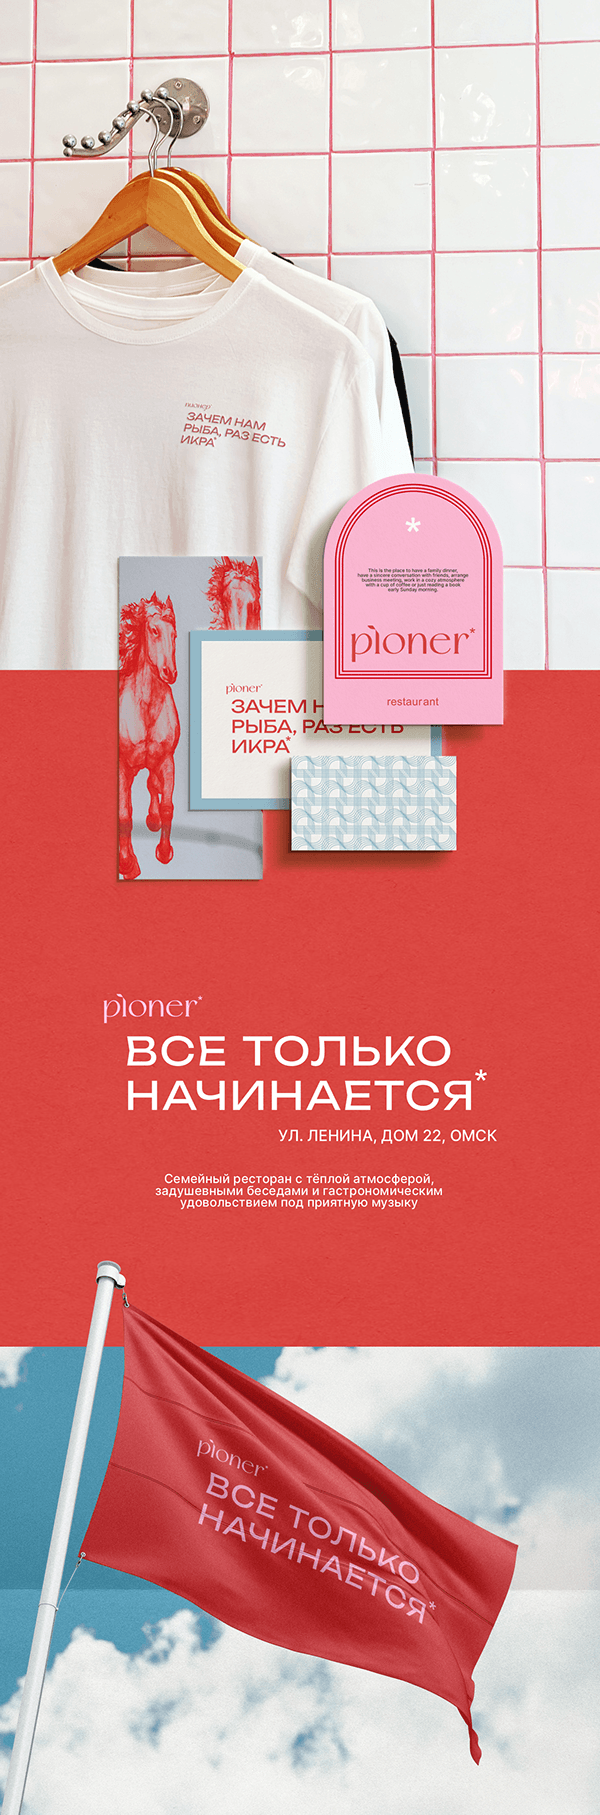 pioner | Logo design | brand identity for a restaurant